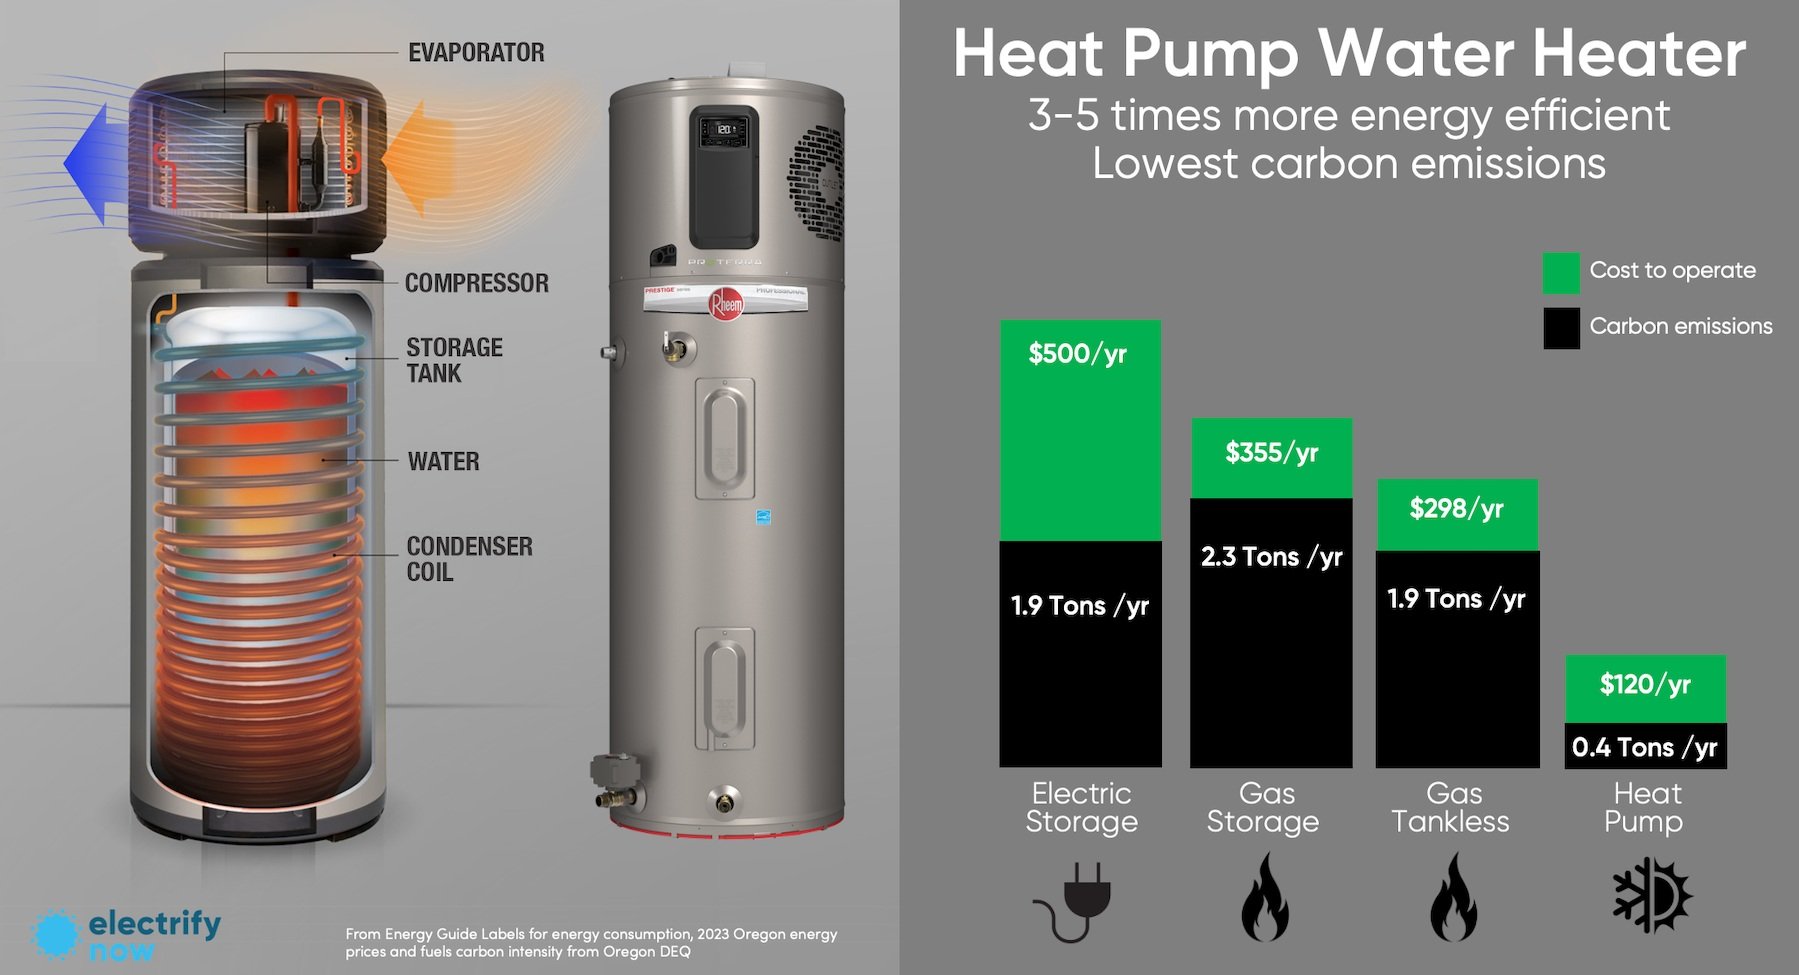 How To Find The Best Hybrid Heat Pump Water Heater — December 2022